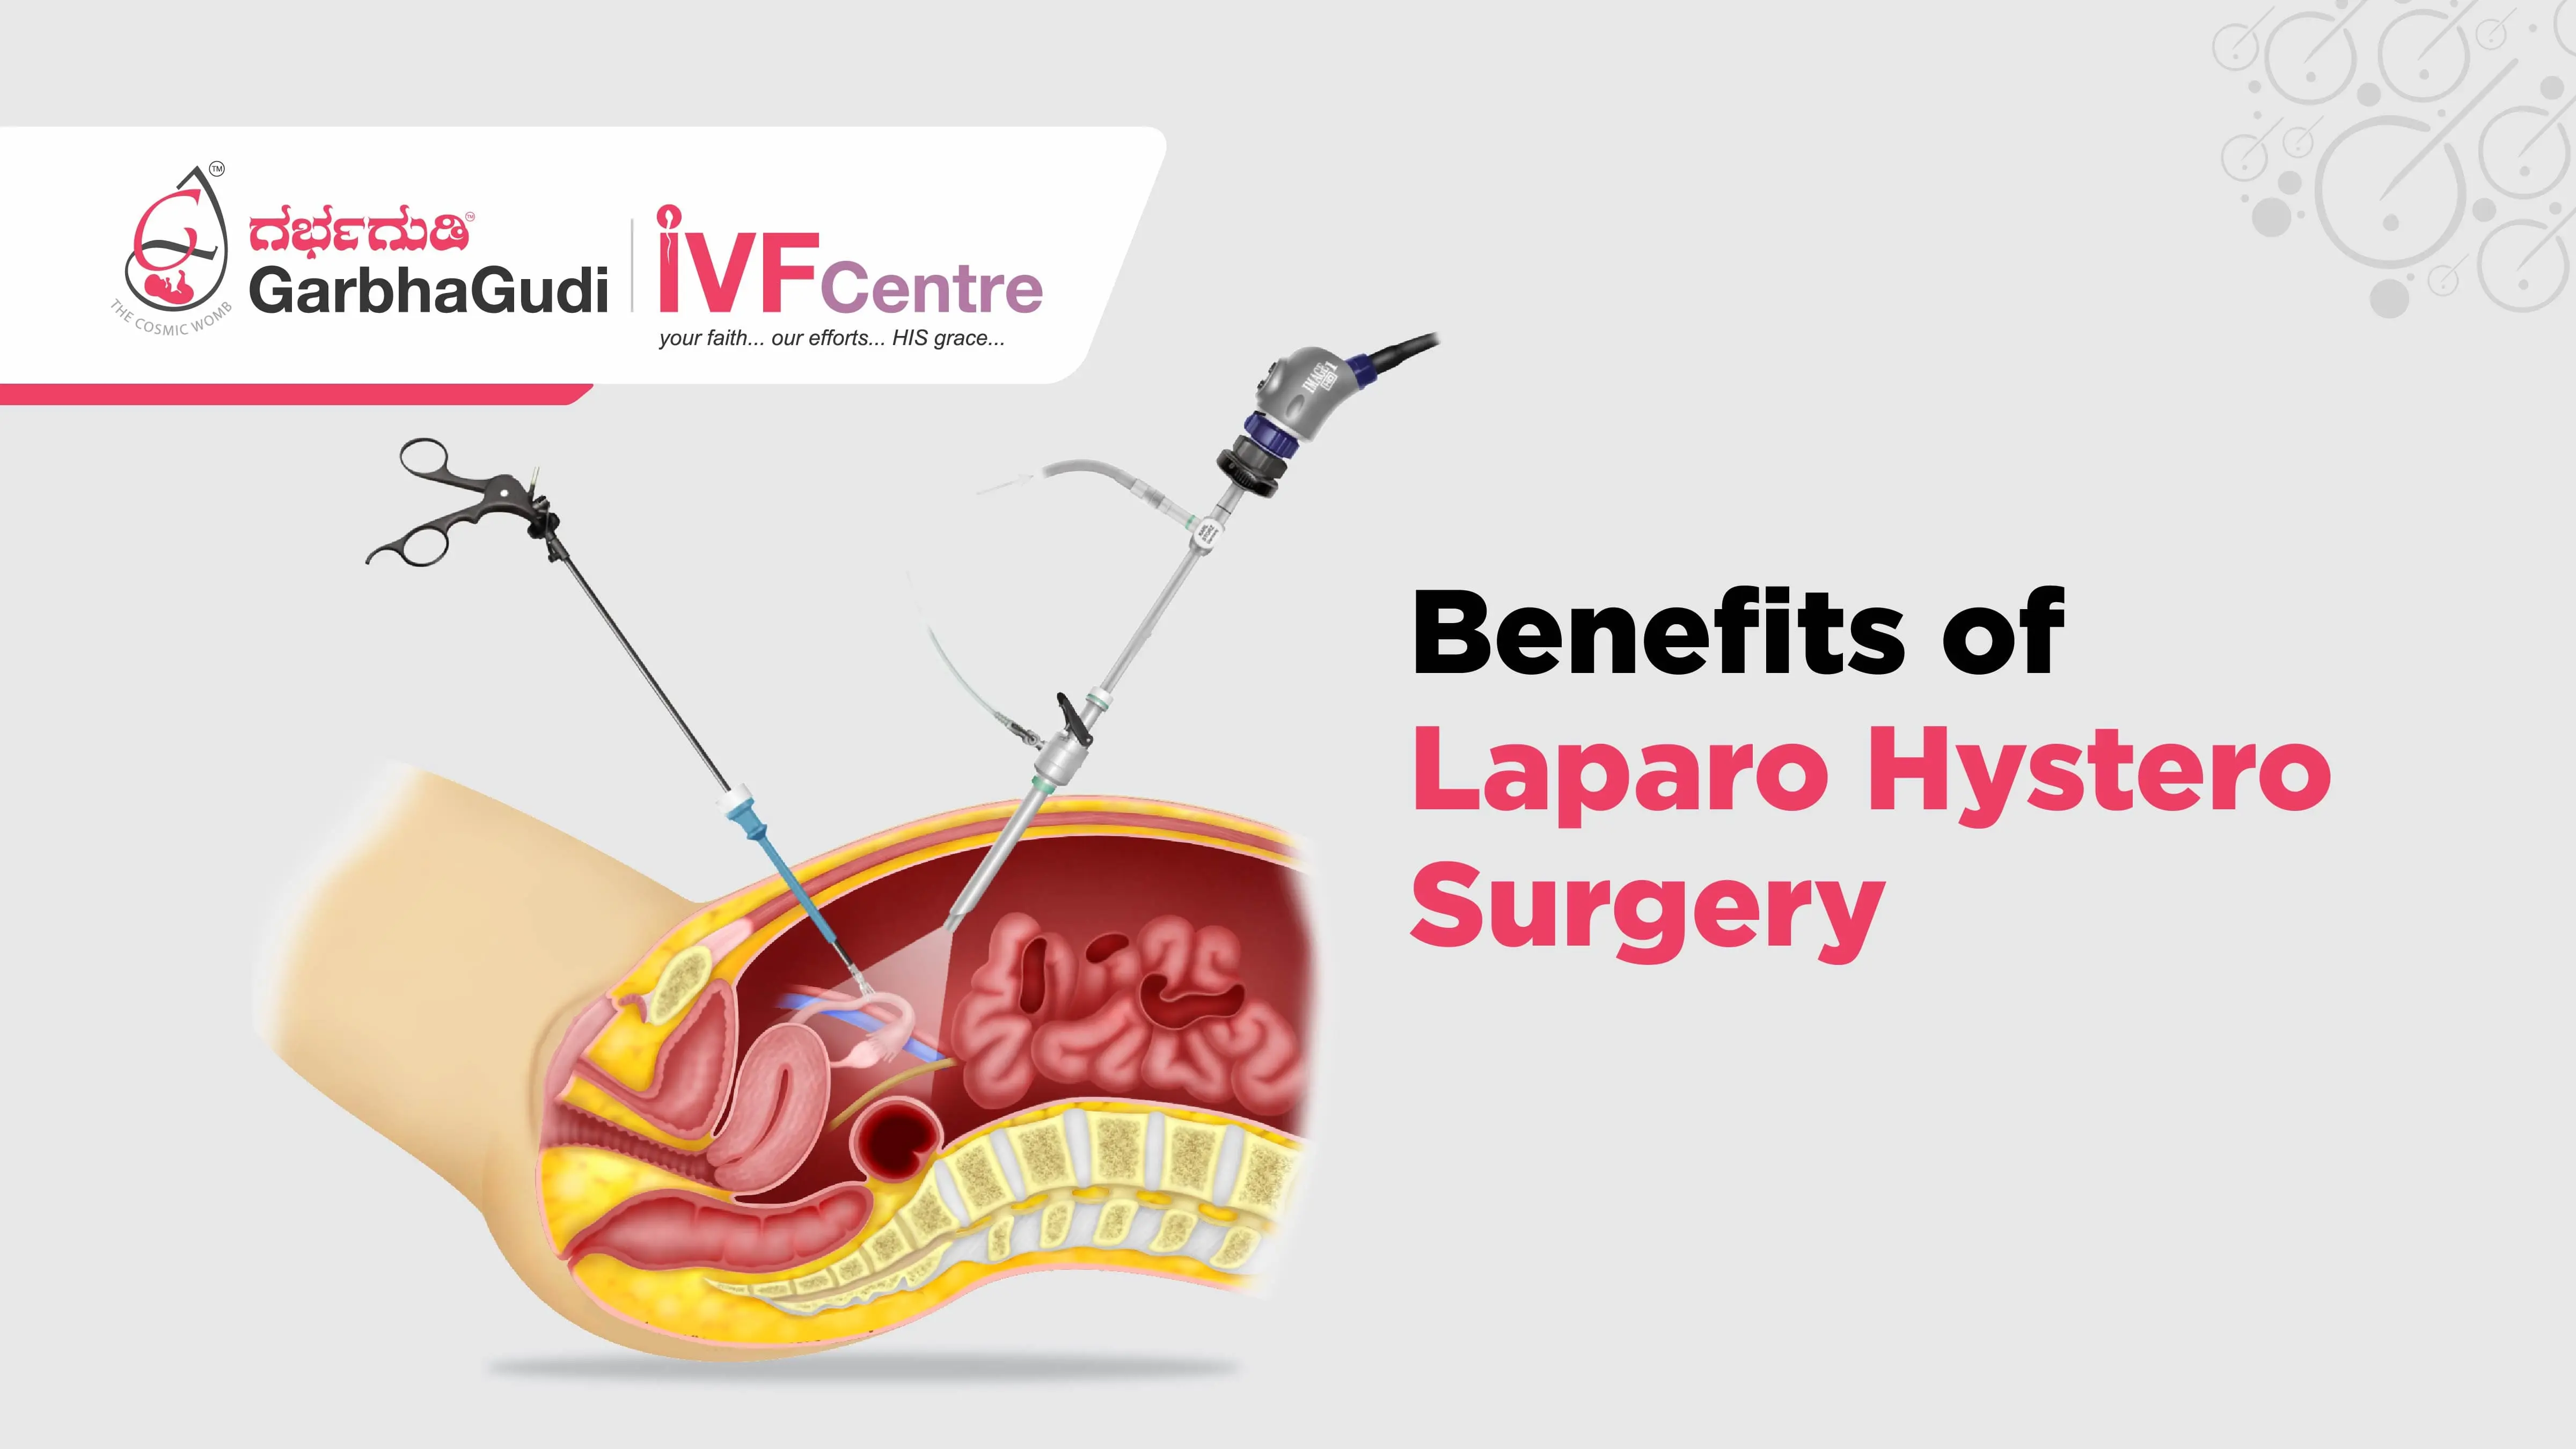 Benefits of LaparoHystero Surgery